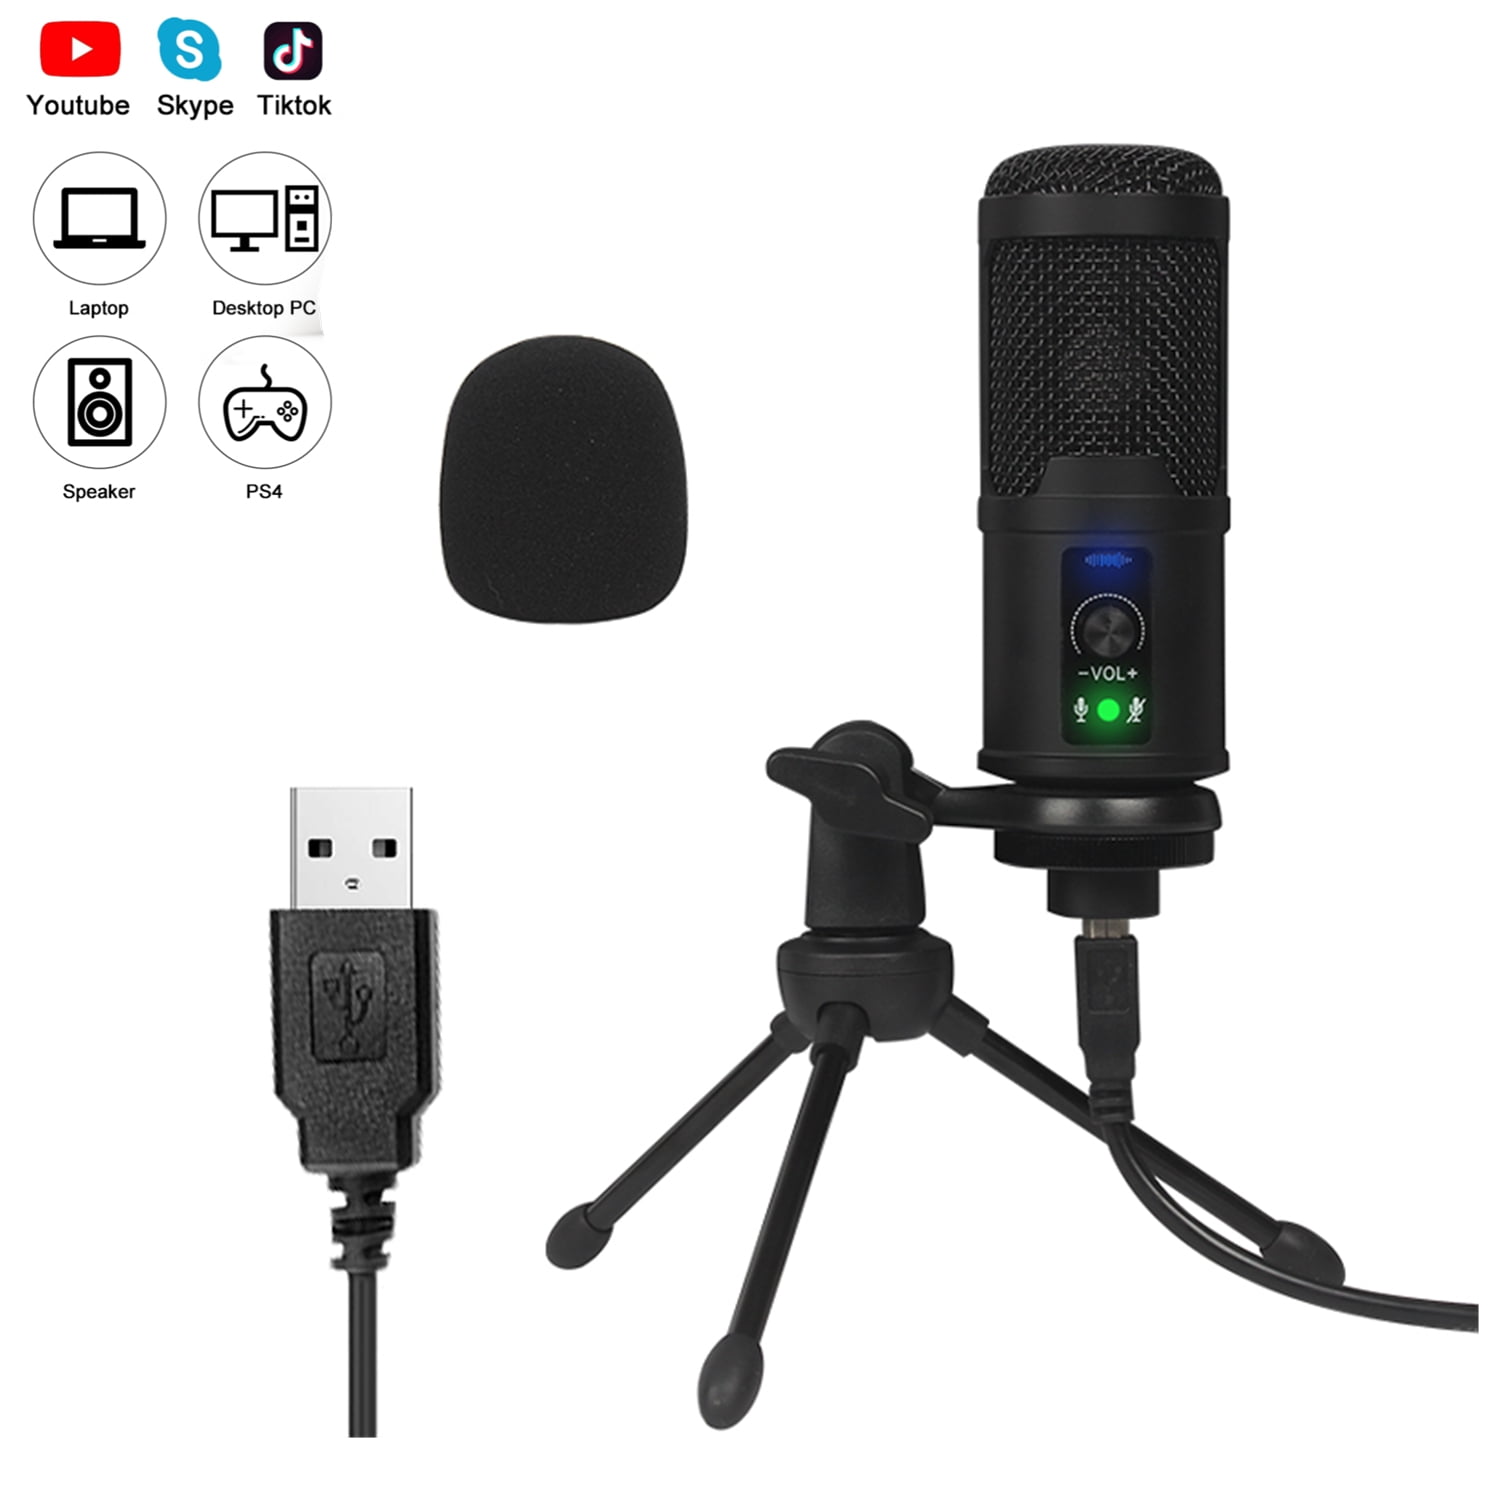 Doosl USB PC 192kHz/24Bit Supercardioid Condenser Microphone Kit with Tripod for Skype YouTuber Karaoke Gaming Recording -